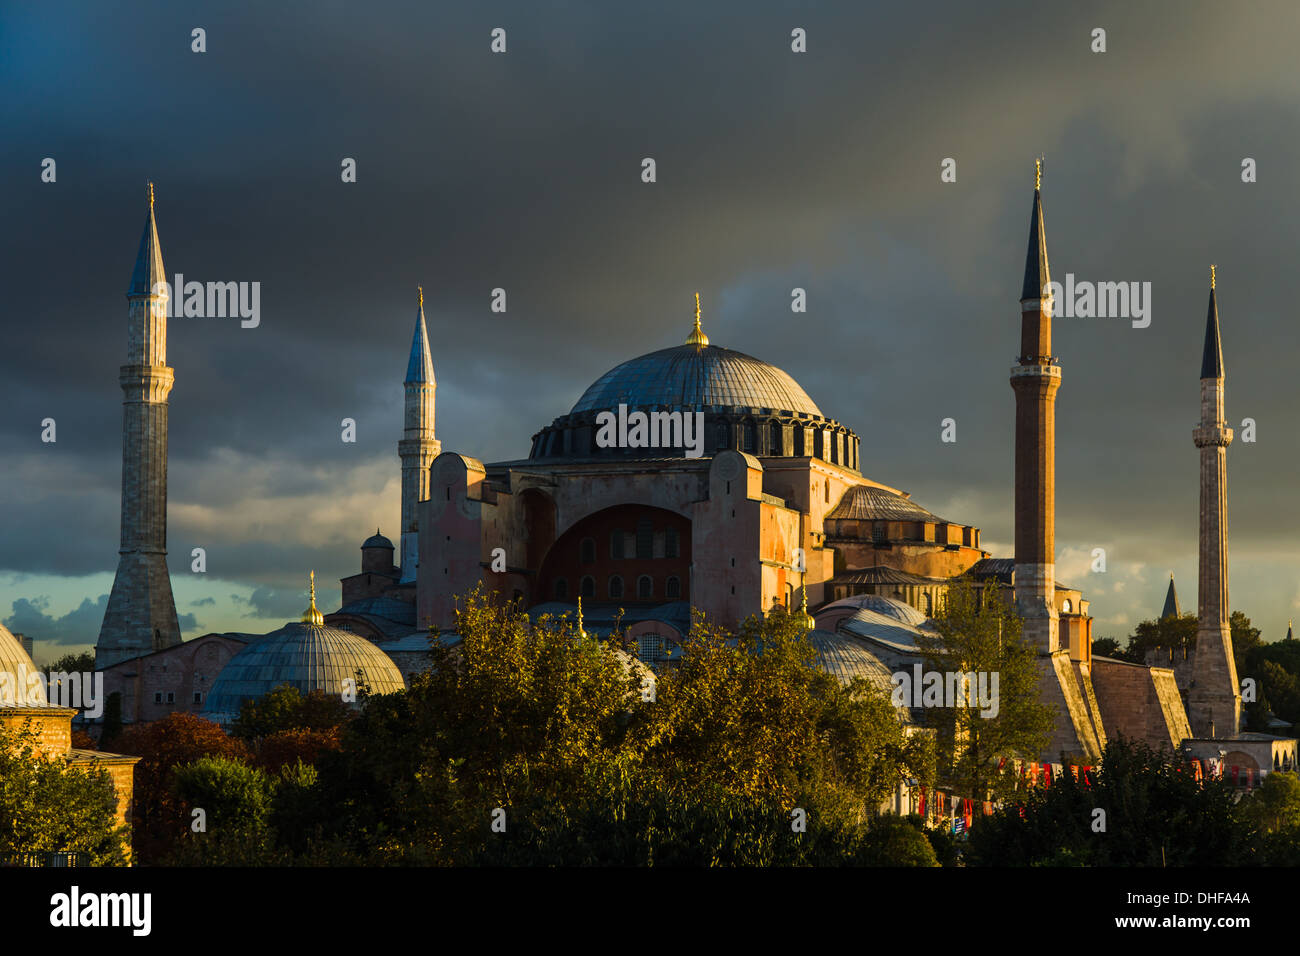 Hagia Sophia (Aya Sofya), Istanbul, allo spuntar del giorno, contro un cielo nuvoloso. Foto Stock